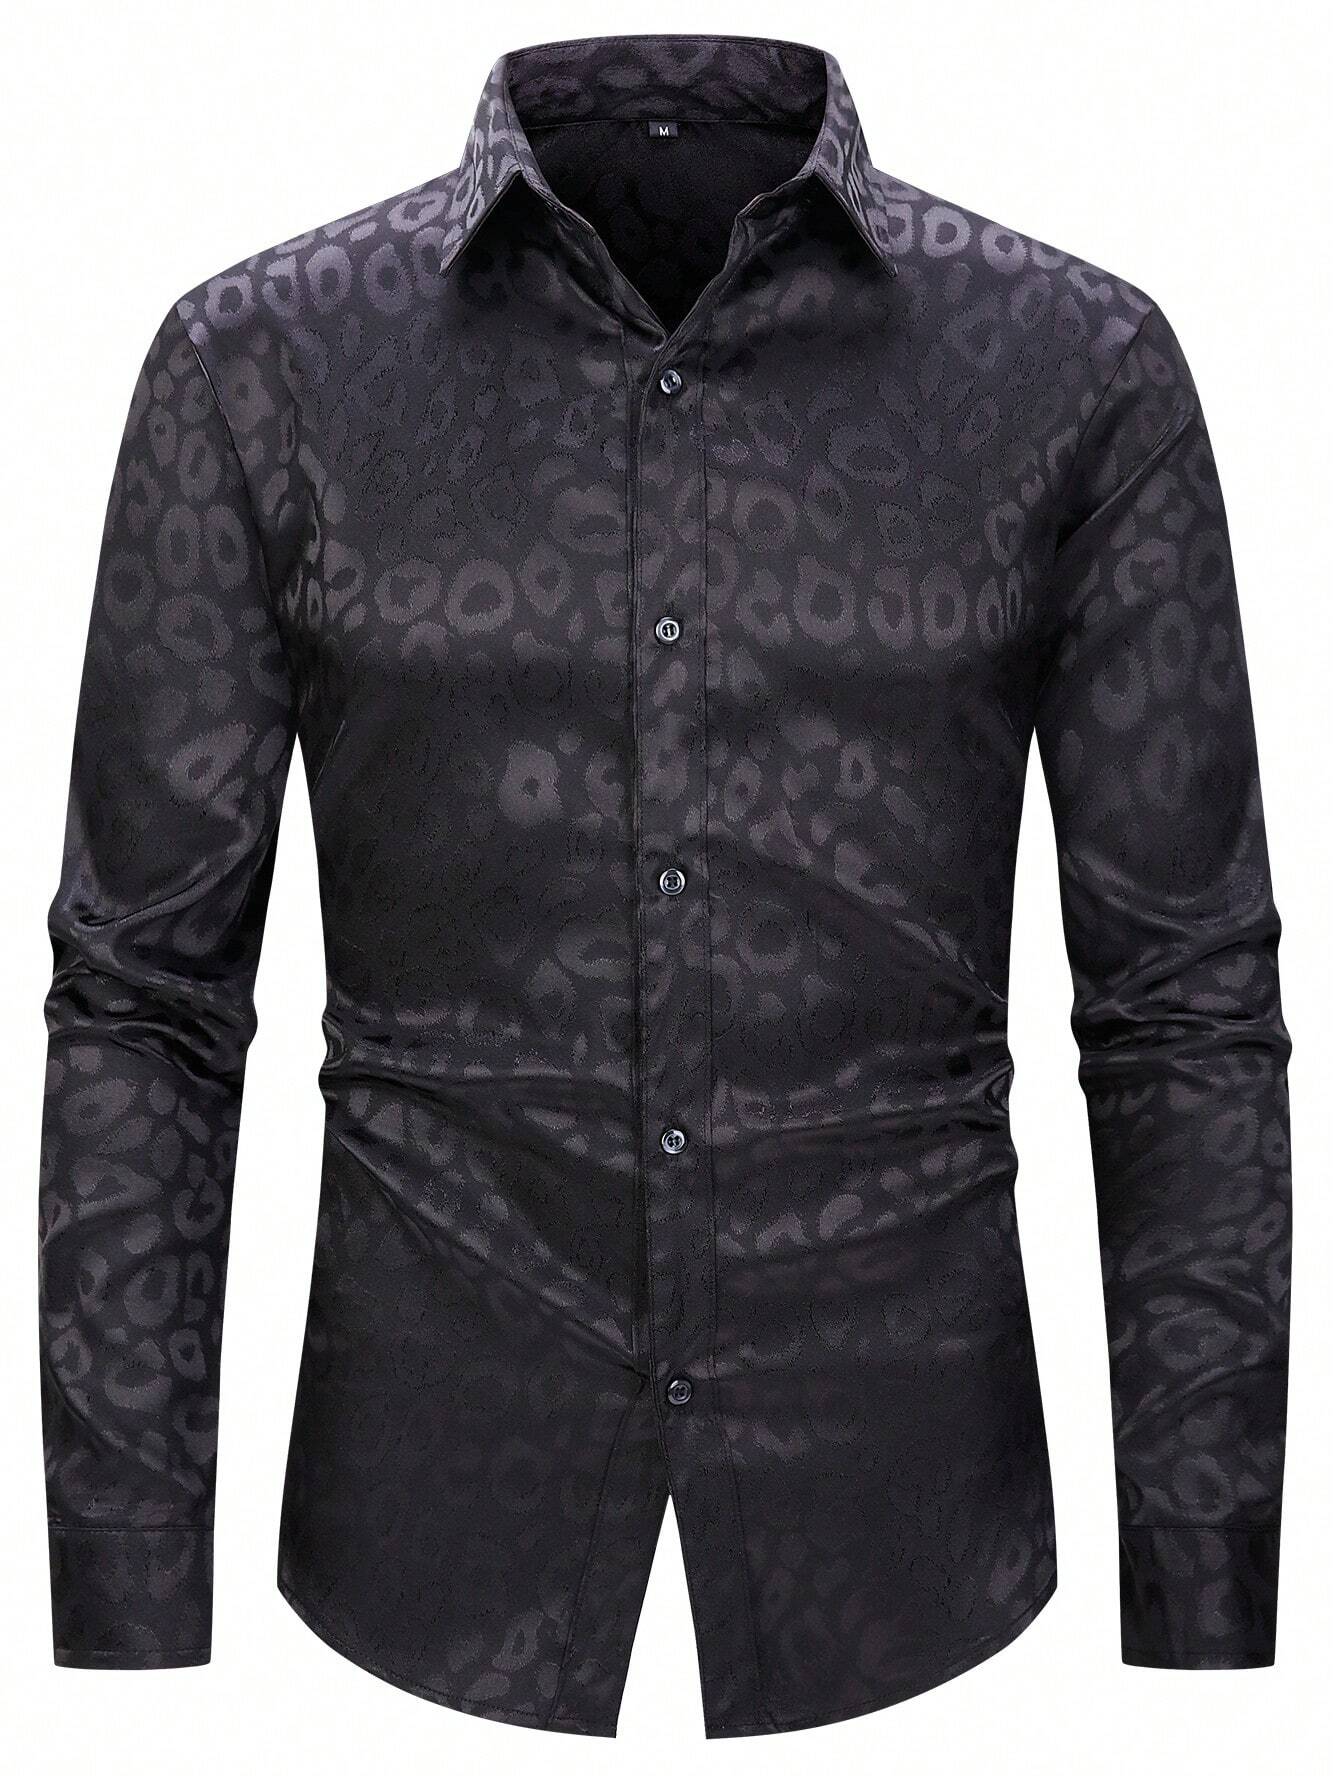 CAVALIERE Shirt  Long bib, Jacquard pattern, Big night out